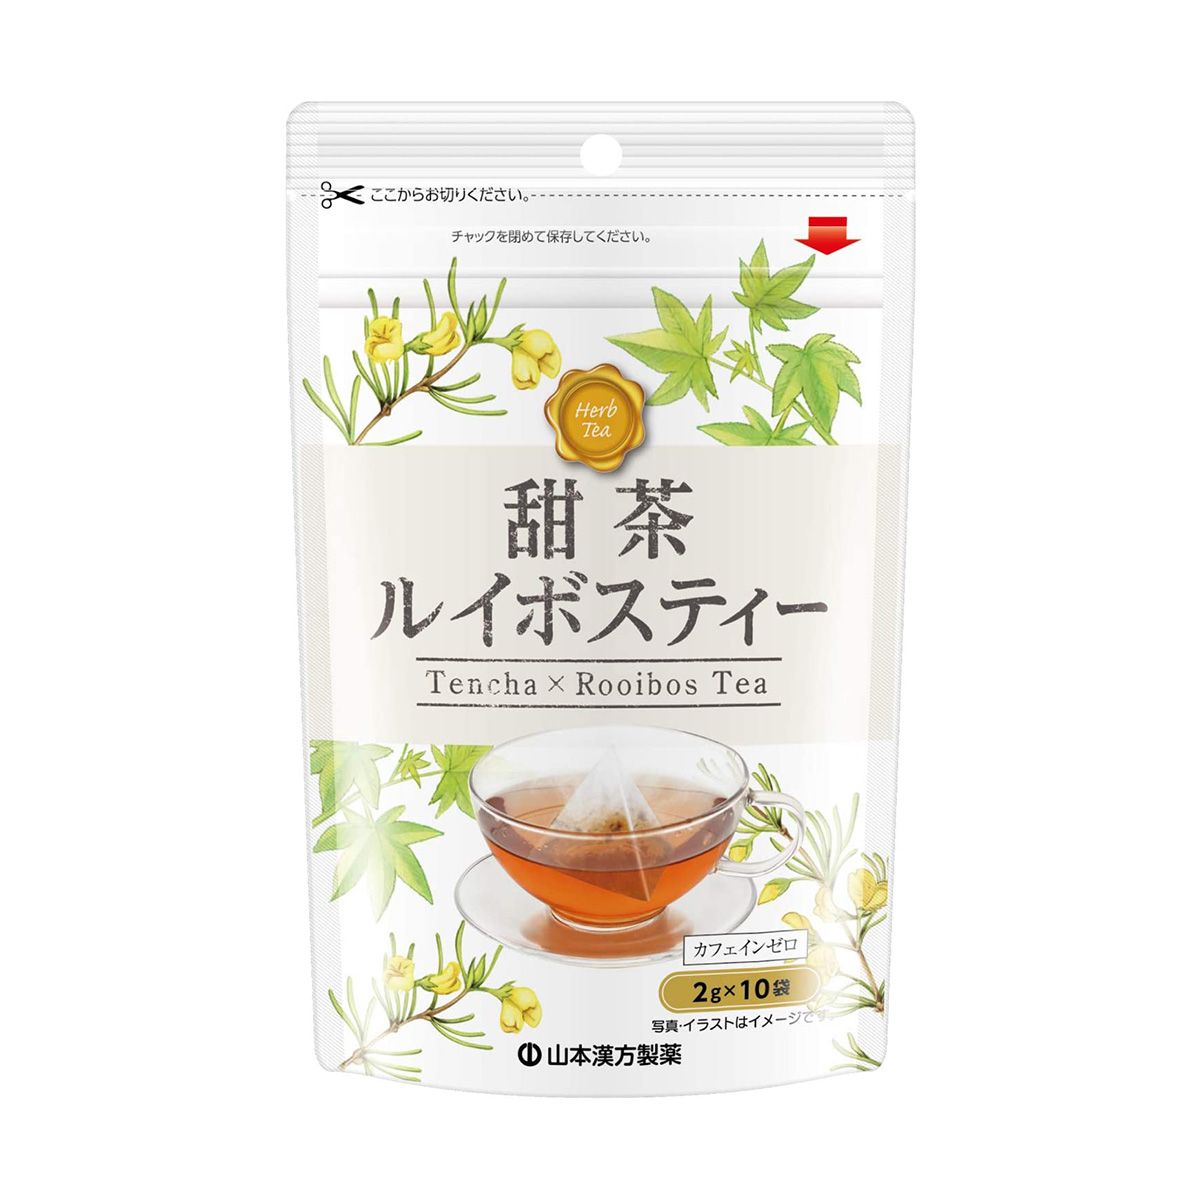 25 Off 甜茶100 3g 包 山本漢方製薬 Materialworldblog Com